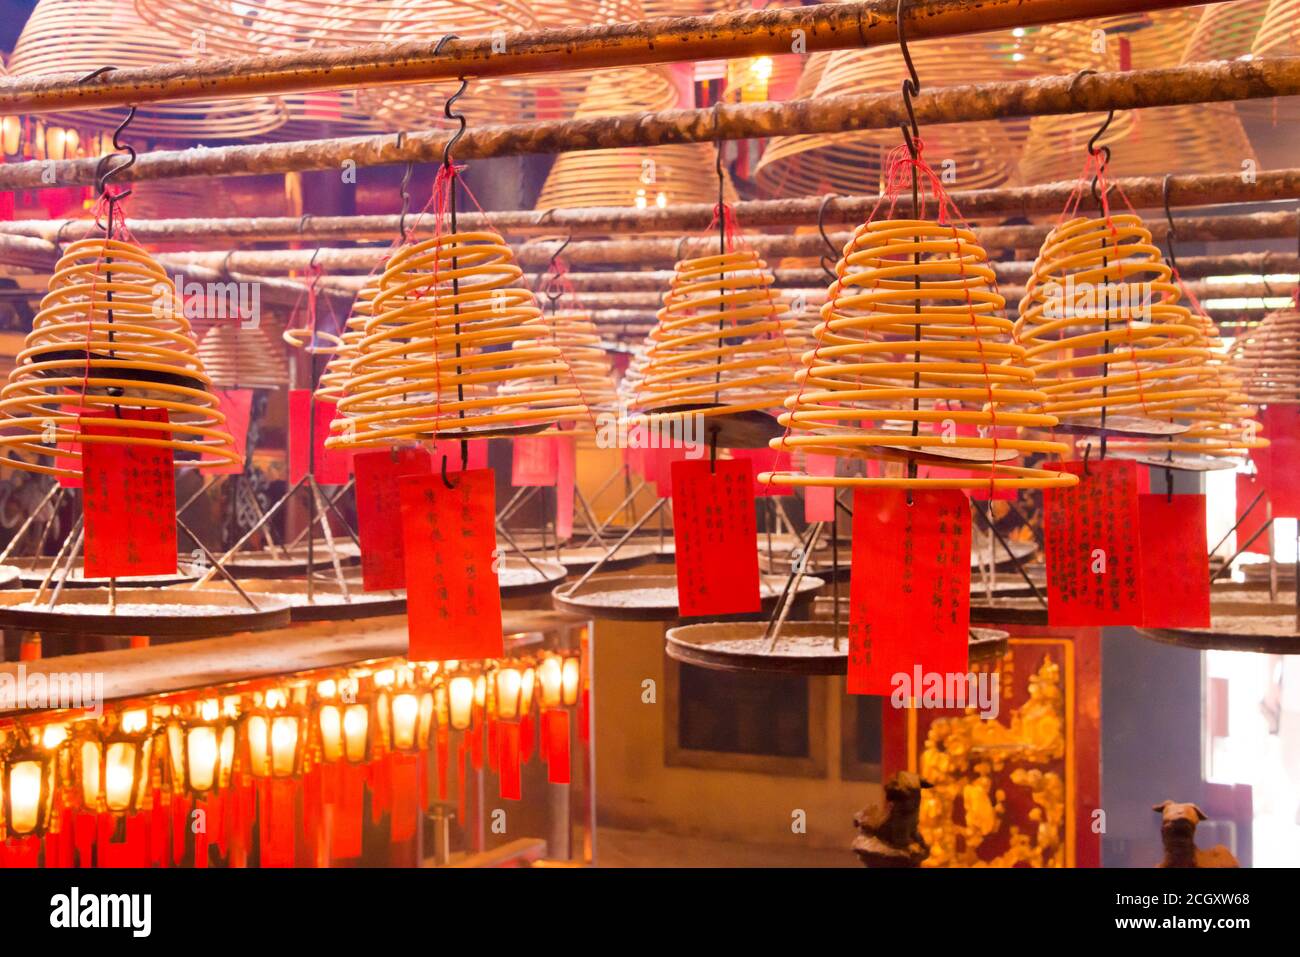 Sheung Wan, Hong Kong - Circular incenses at Man Mo Temple in Sheung Wan, Hong Kong. a famous Tourist spot. Stock Photo